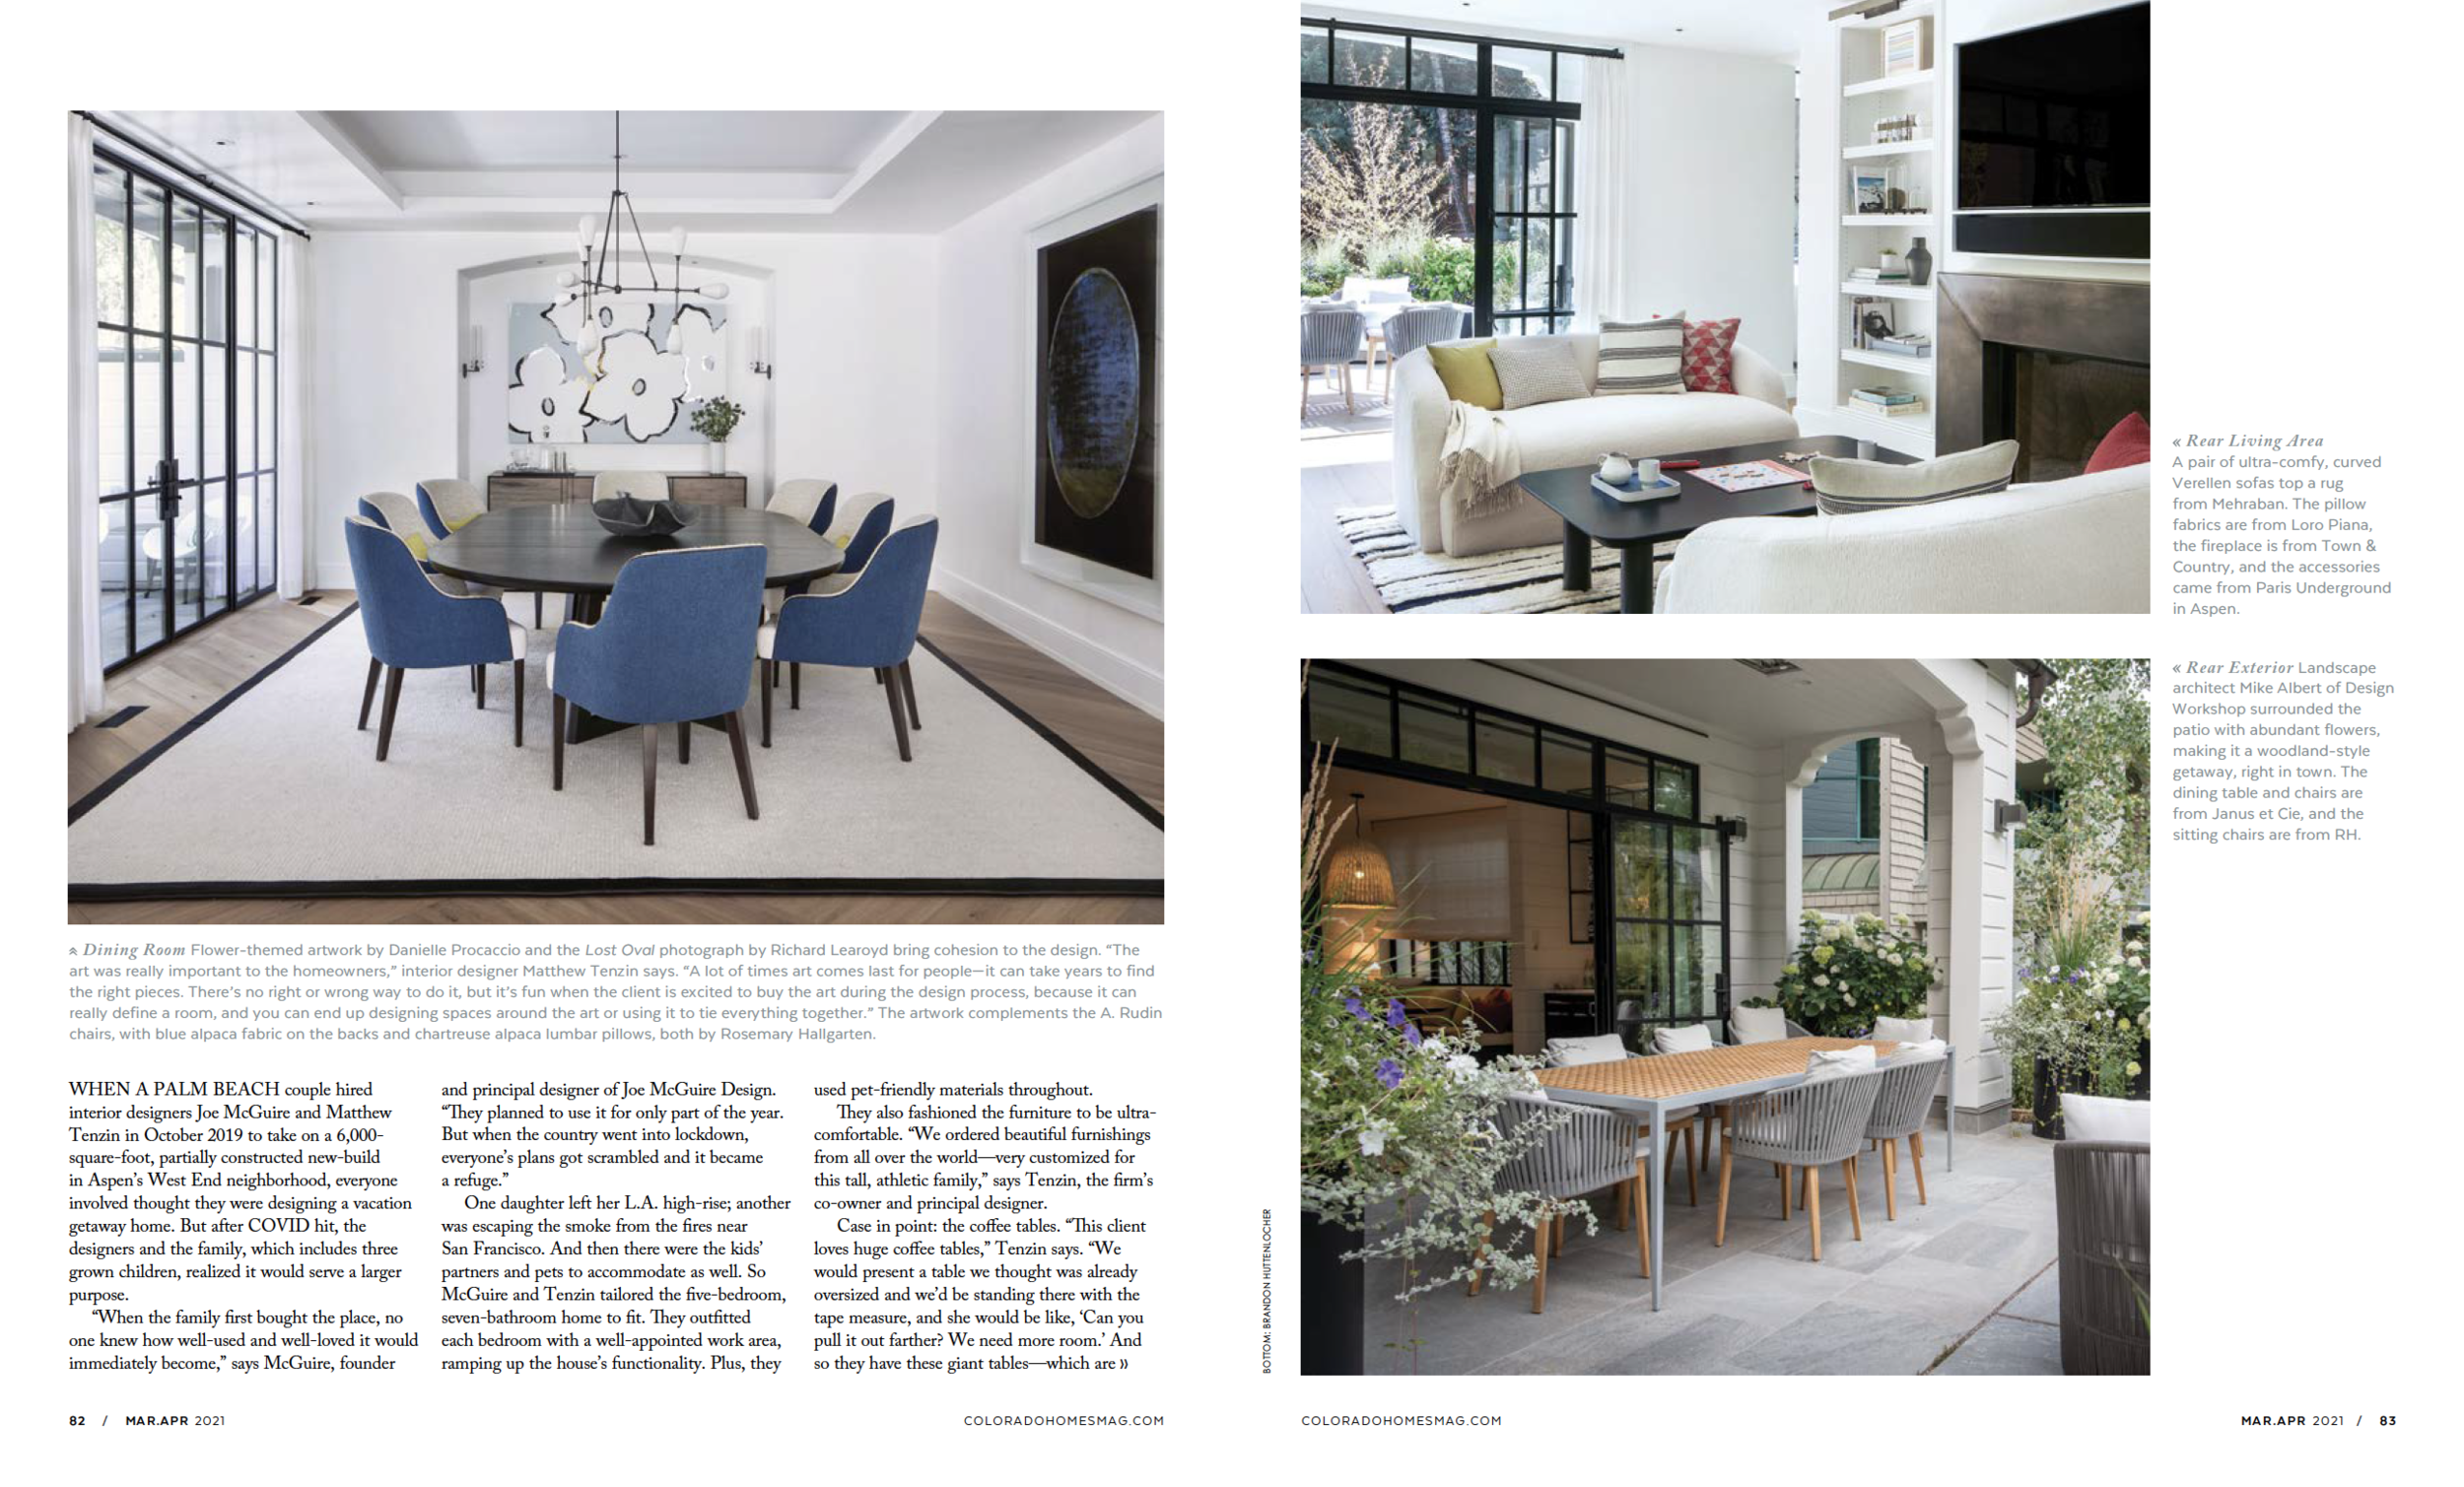 Joe McGuire Design featured in Colorado Homes Magazine